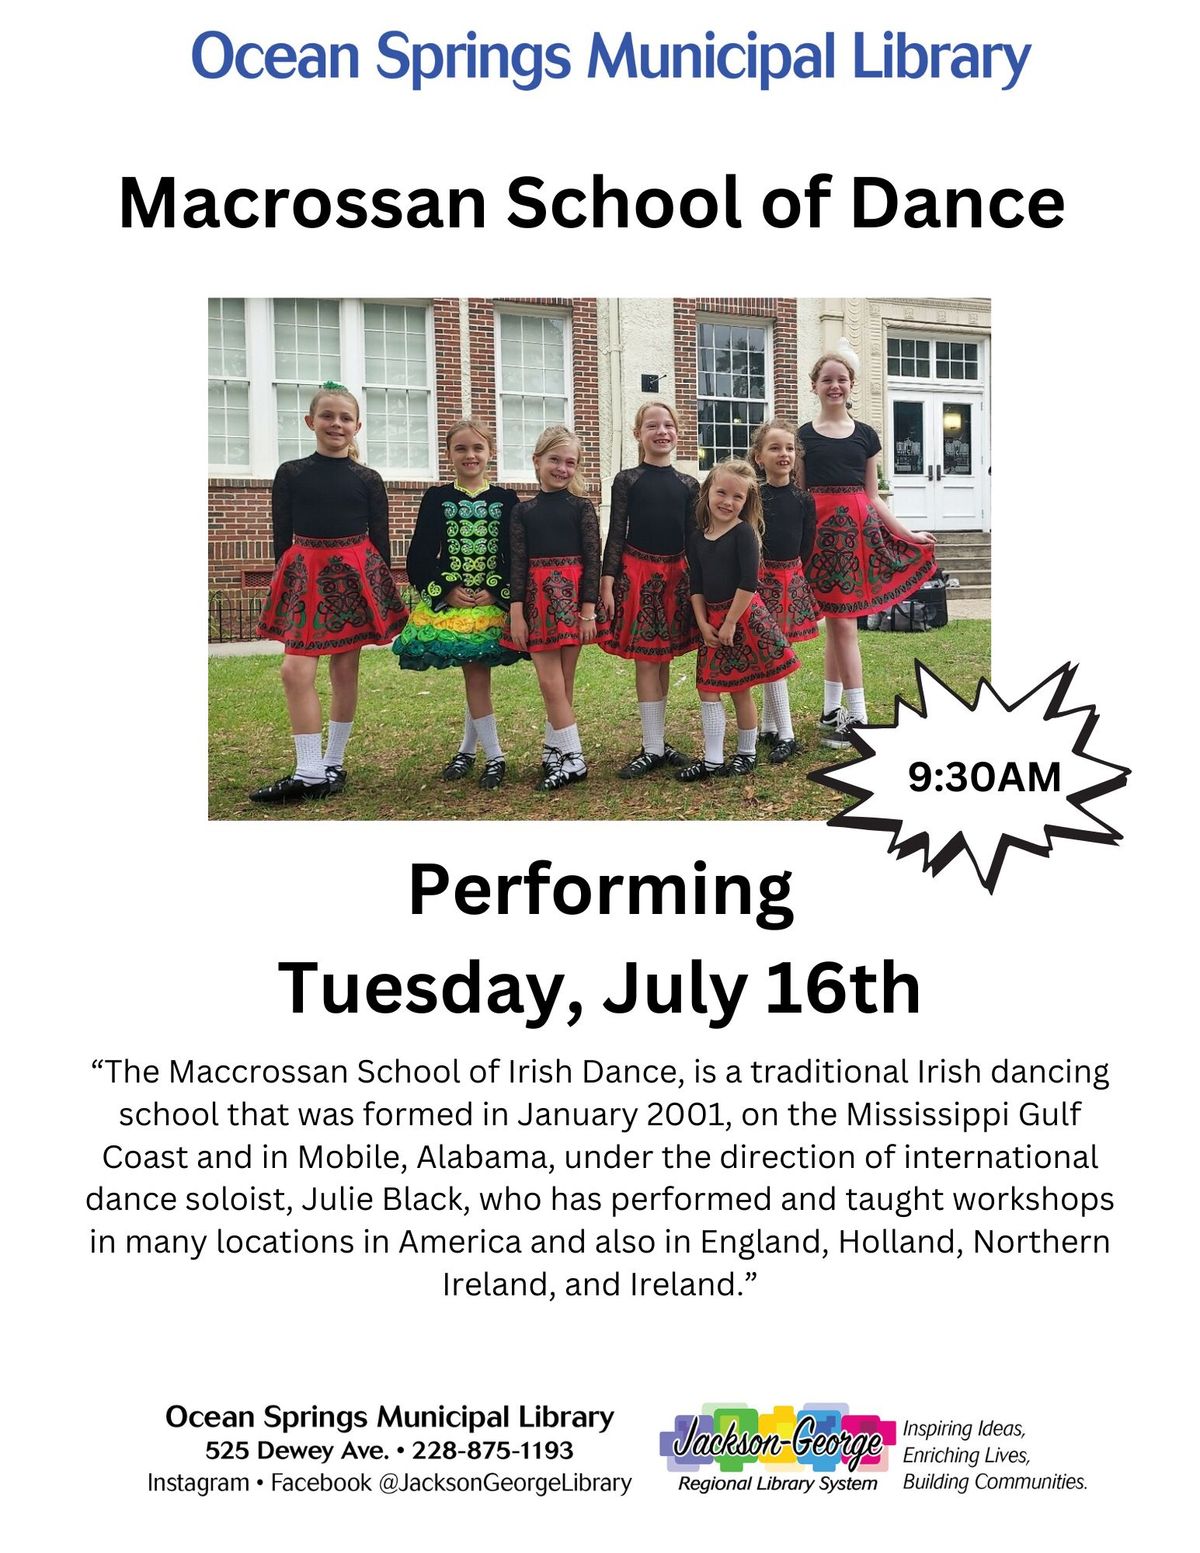 Macrossan School of Irish Dance